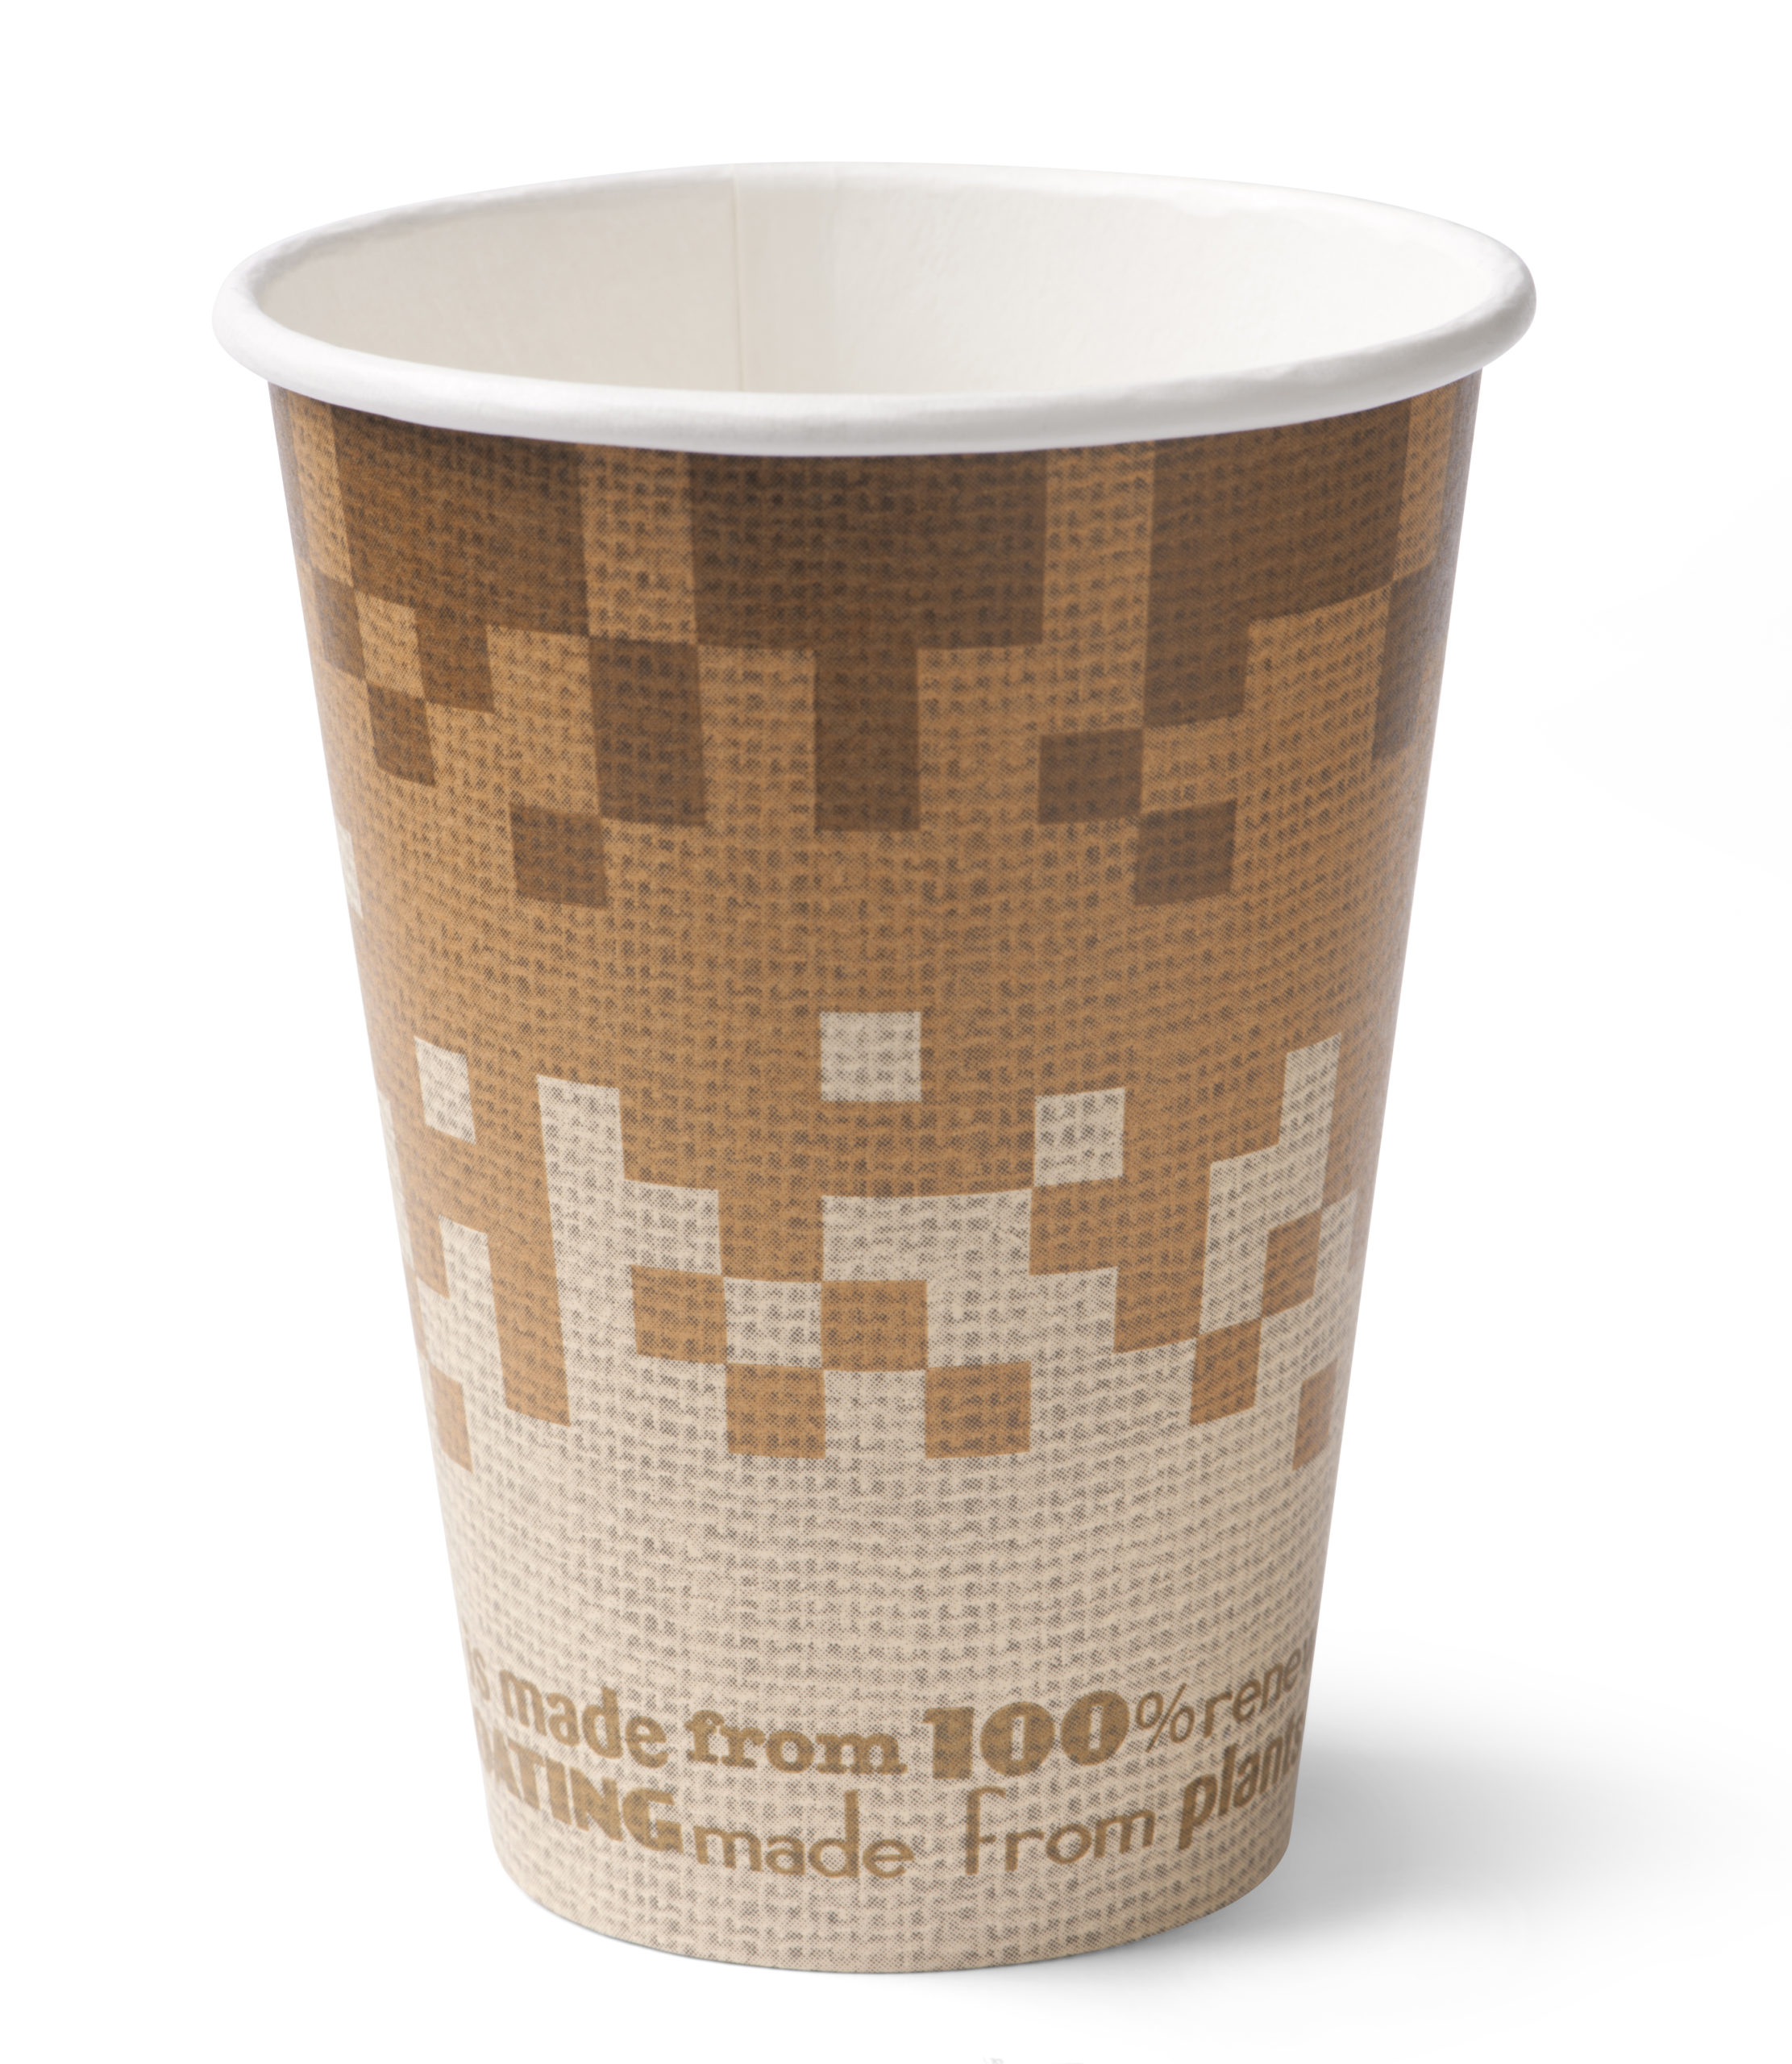 biodore retro verde koffiebekers karton 300ml bio hot cup biologische koffiebeker scaled